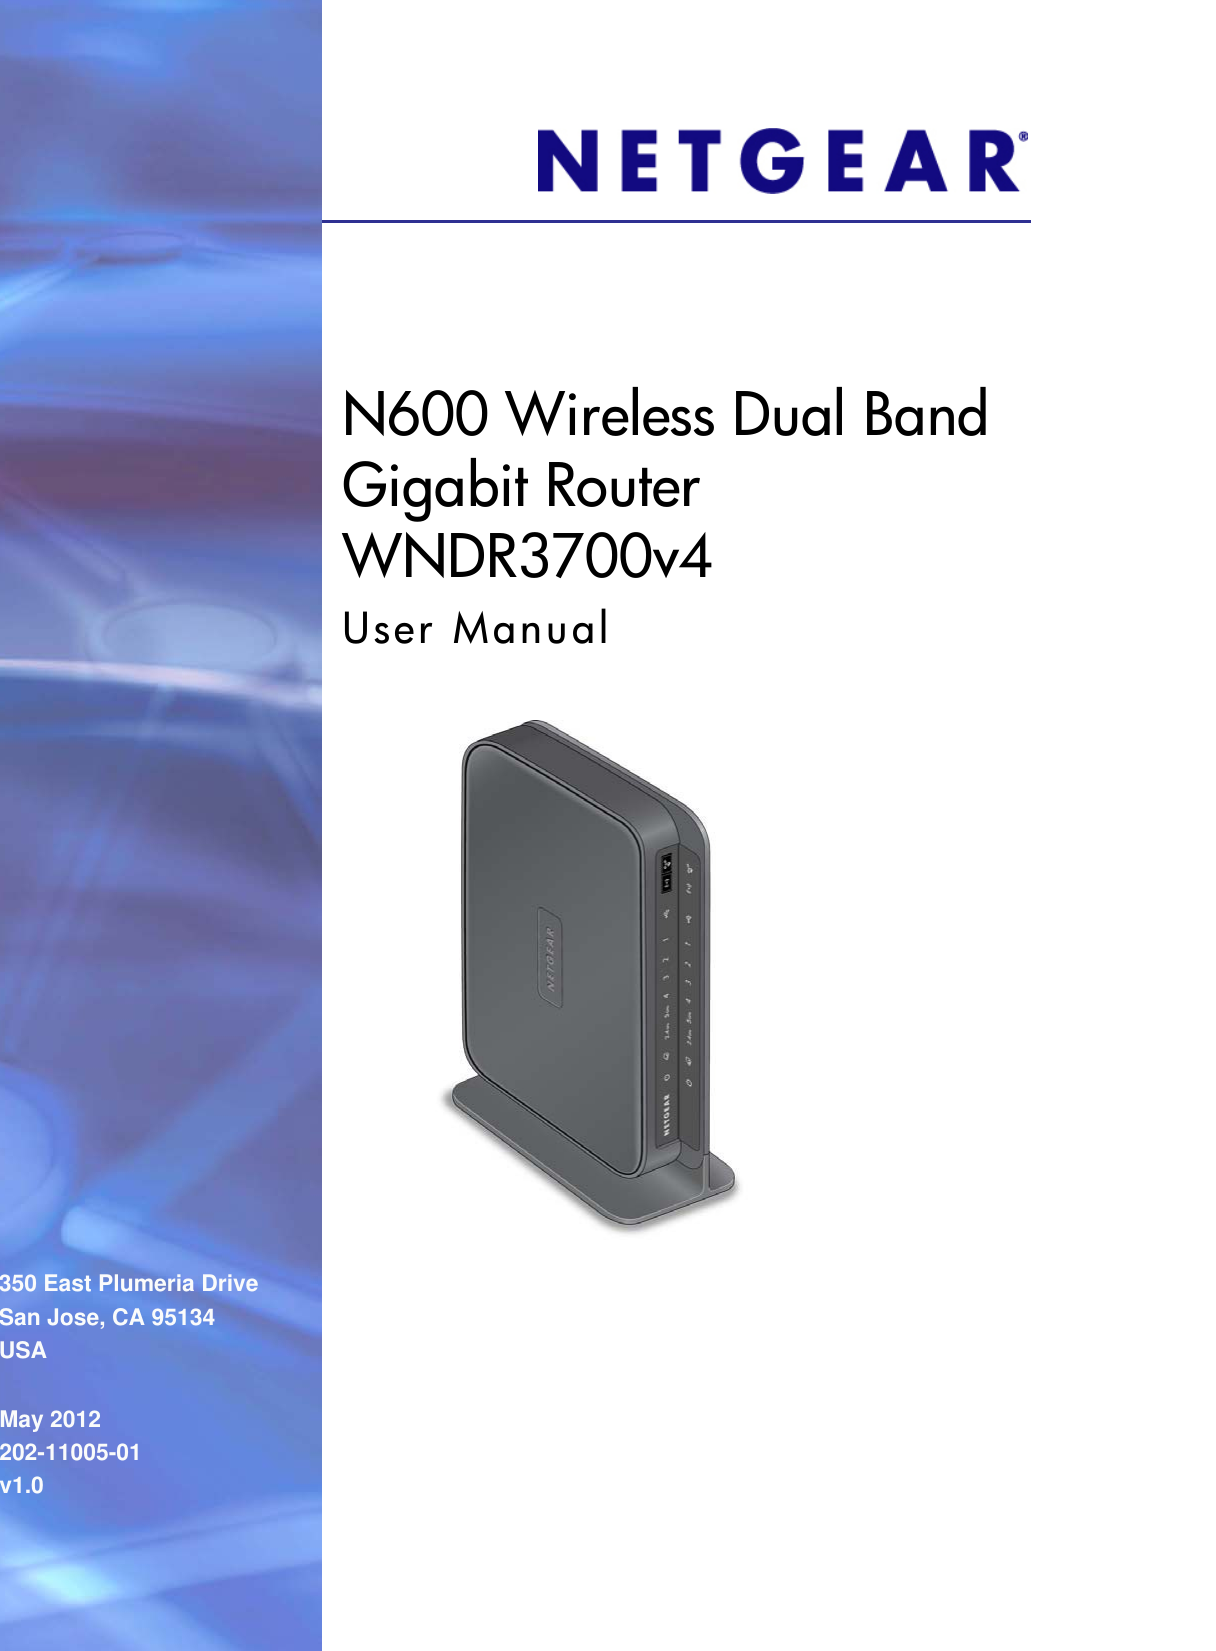 350 East Plumeria DriveSan Jose, CA 95134USAMay 2012202-11005-01v1.0N600 Wireless Dual Band Gigabit Router WNDR3700v4User Manual